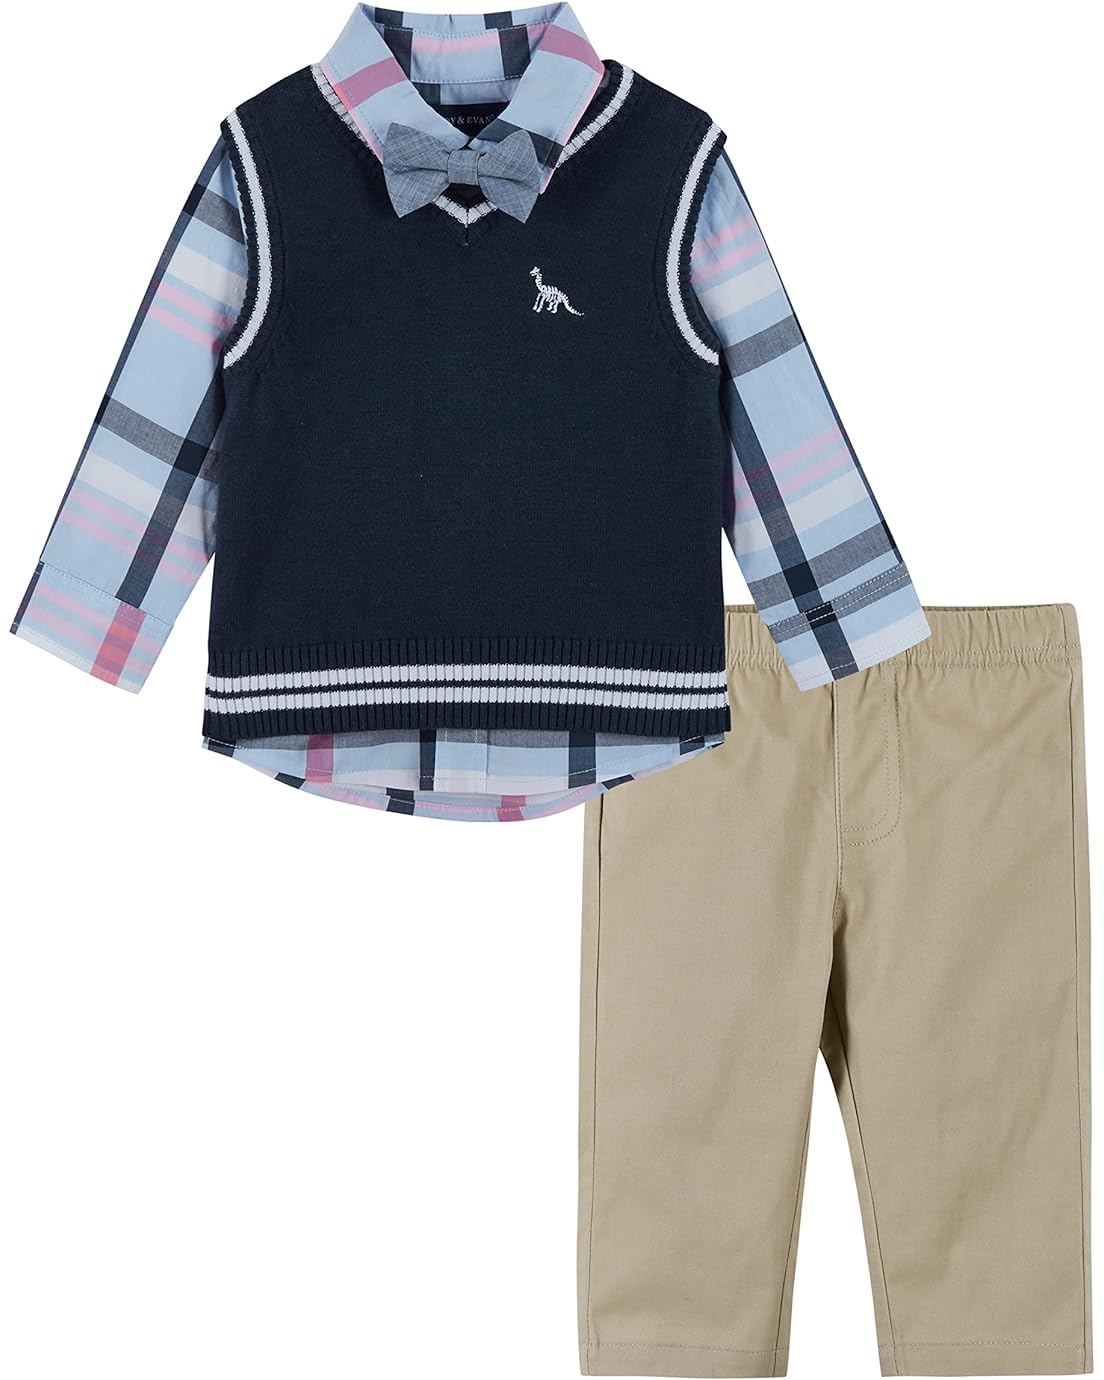 ANDY & EVAN KIDS Sweater Vest Set (Toddleru002FLittle Kids)